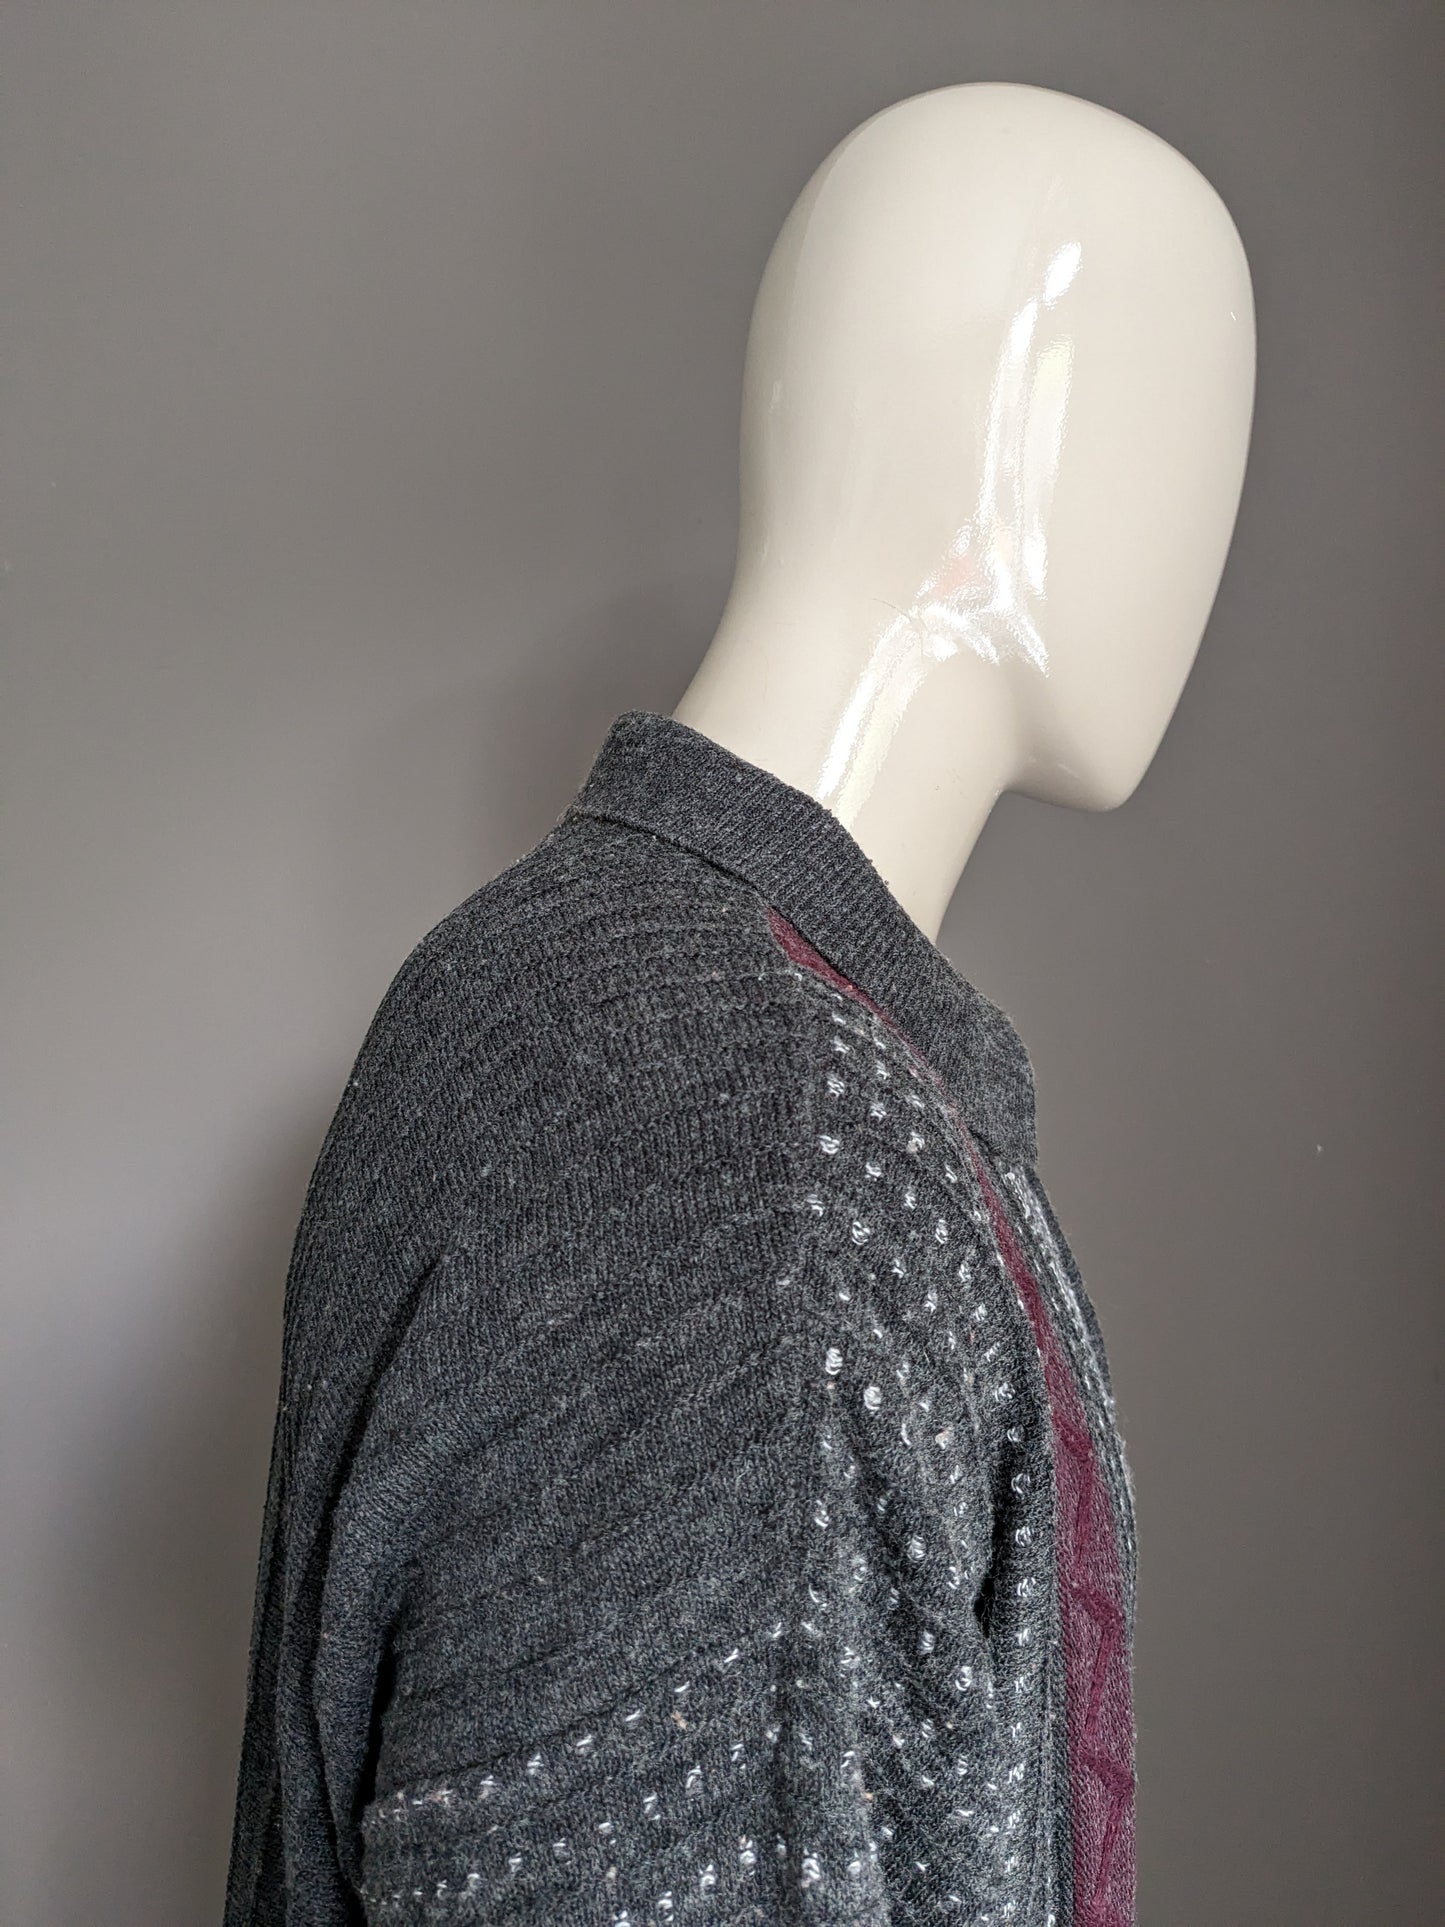 Vintage Claudio Ferrara wool sweater with zipper. Gray Bordeaux motif. Size 2XL / XXL.